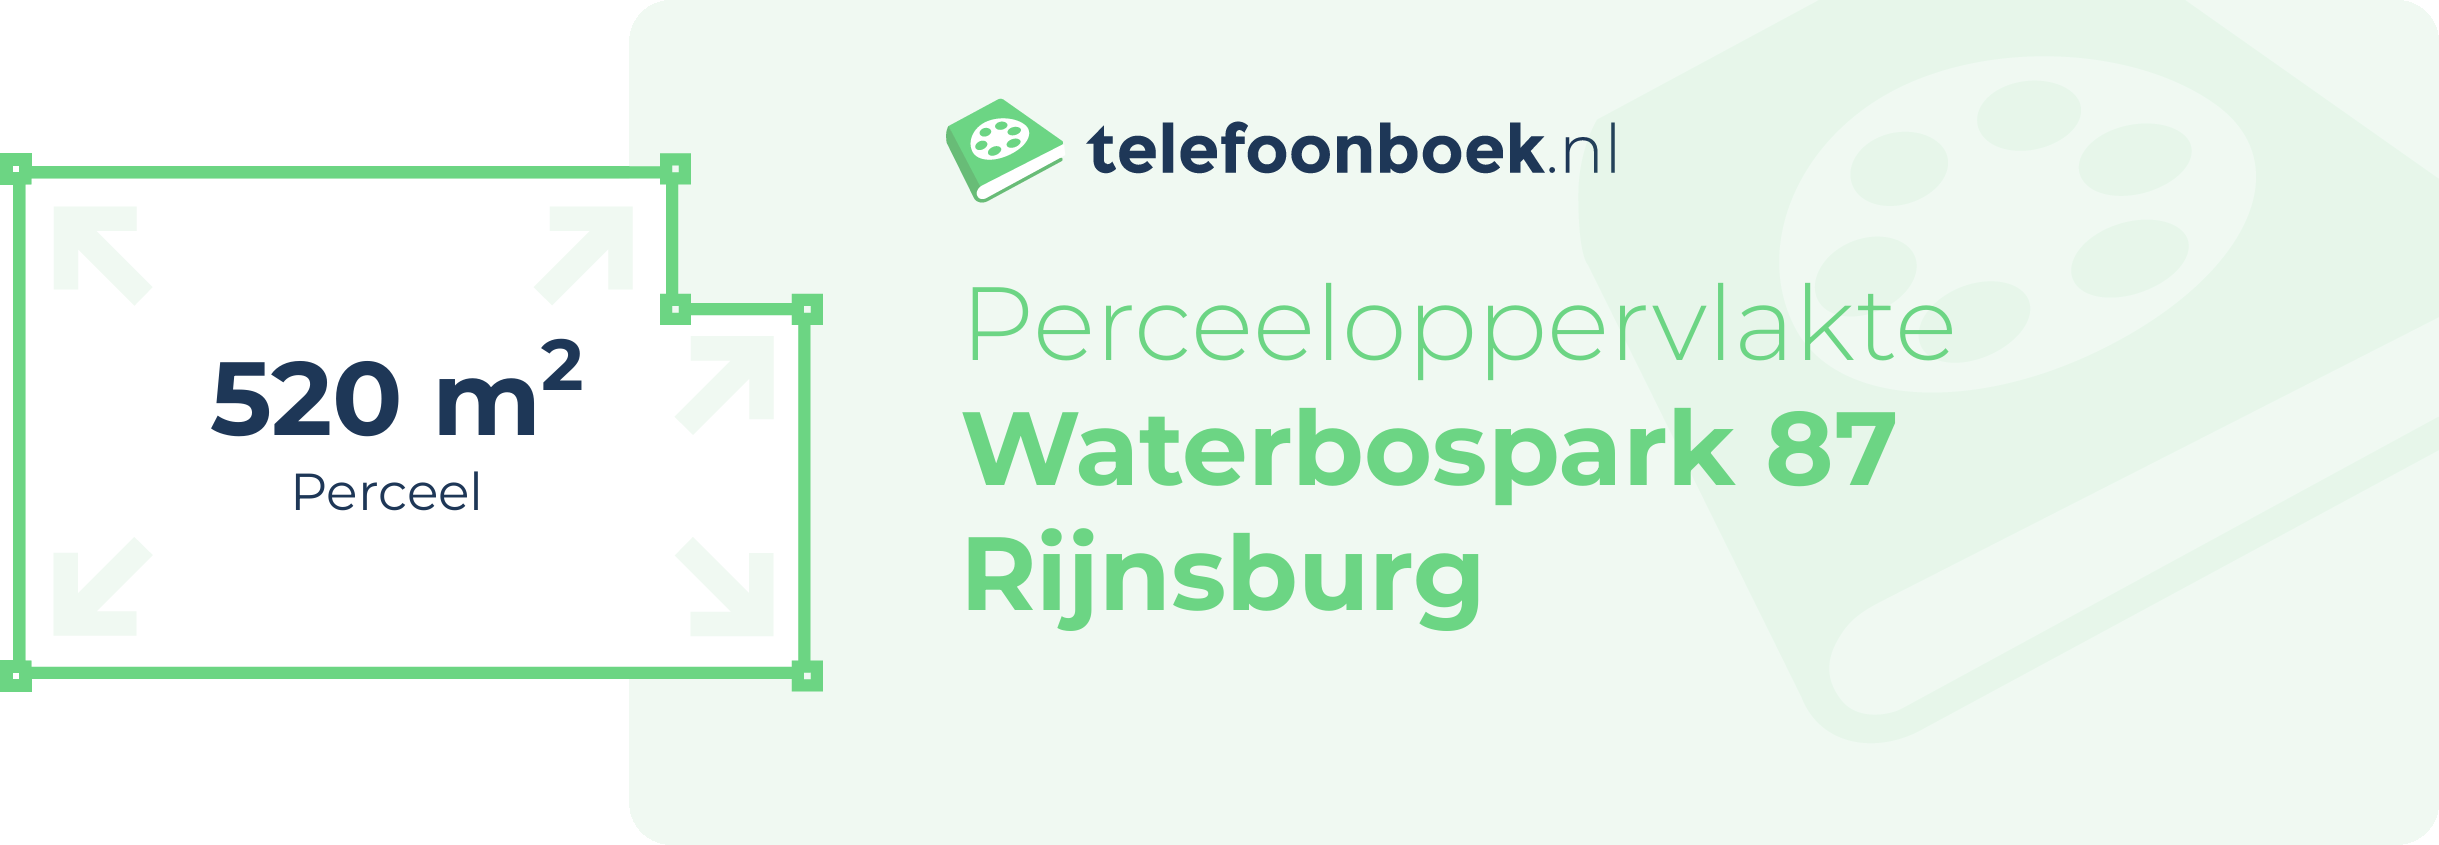 Perceeloppervlakte Waterbospark 87 Rijnsburg